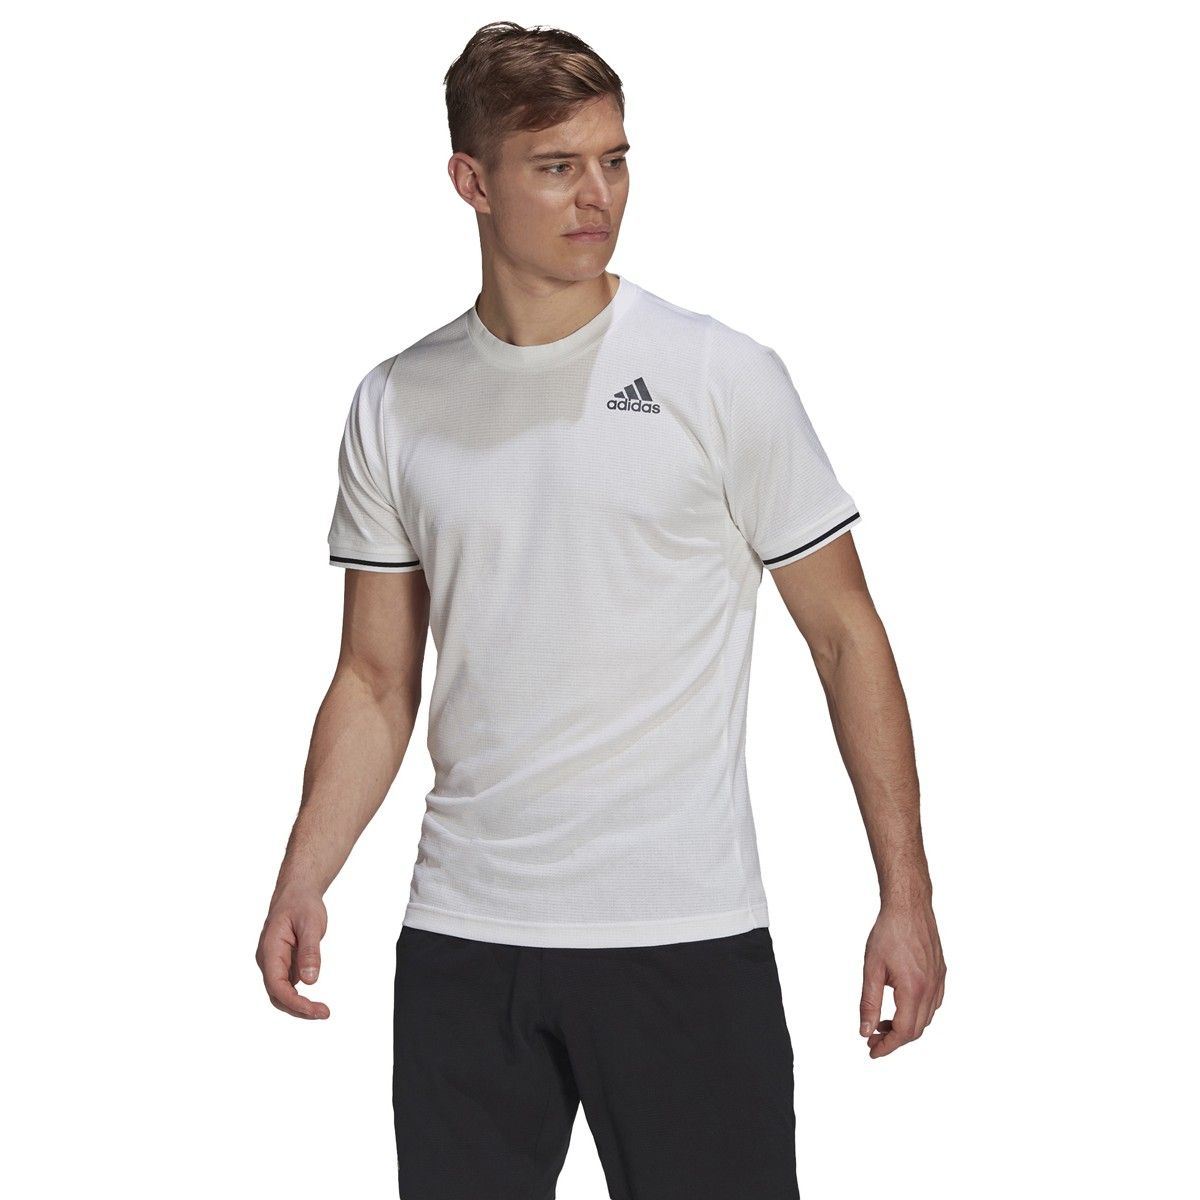 adidas Freelift Men's Tennis T-Shirt GL5339